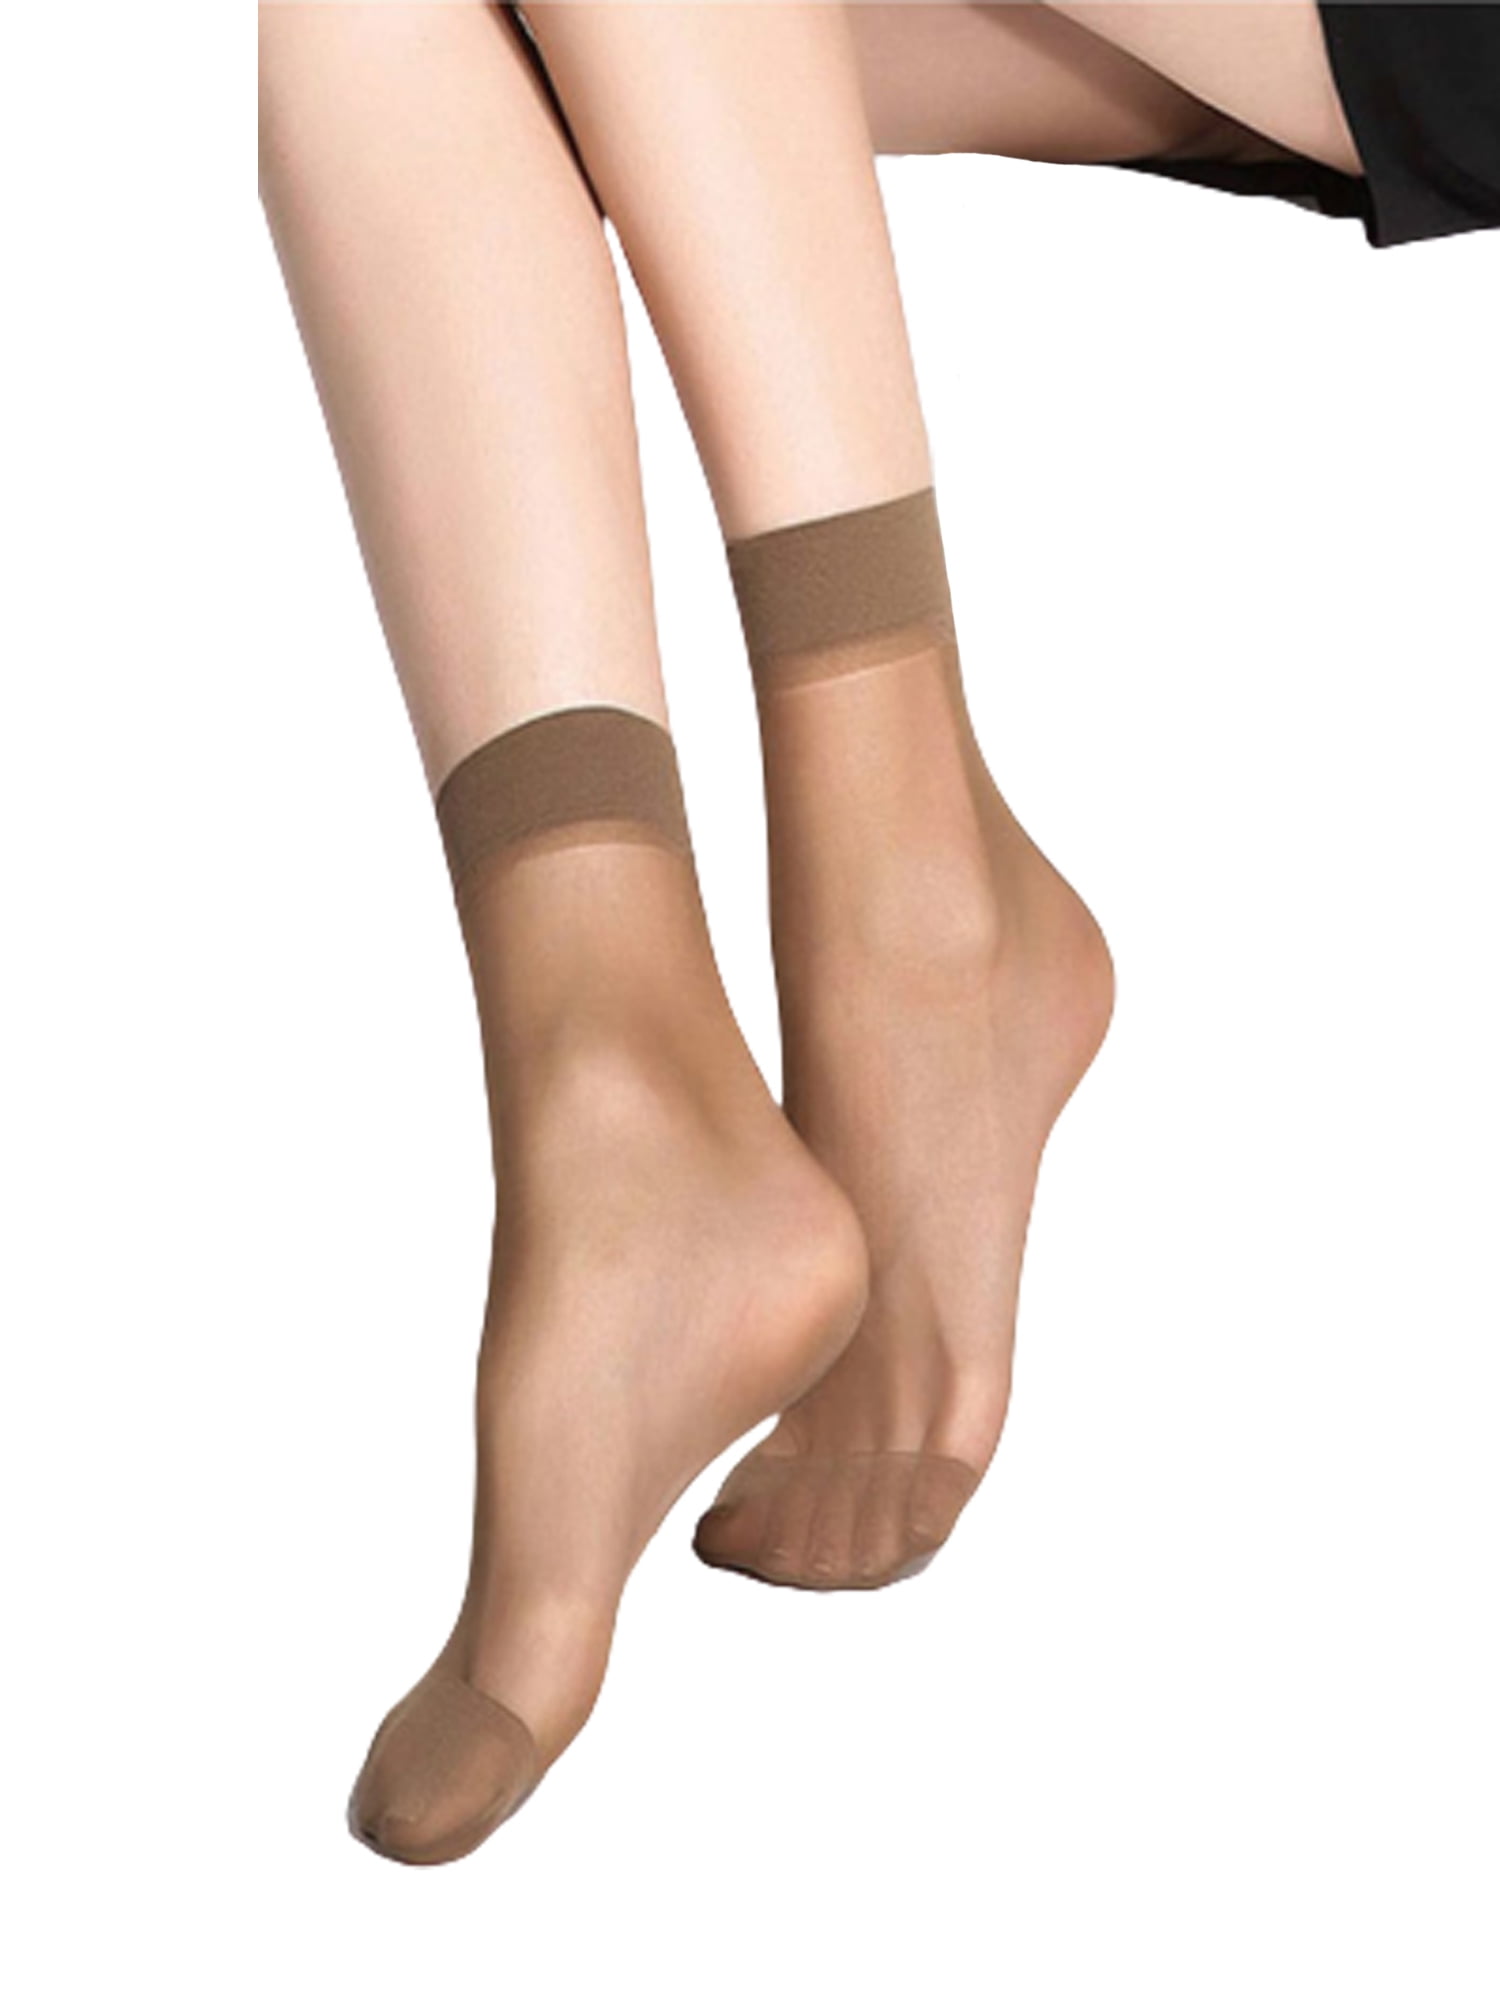 Womens 10 pairs nylon ancle sheer socks 30 Den